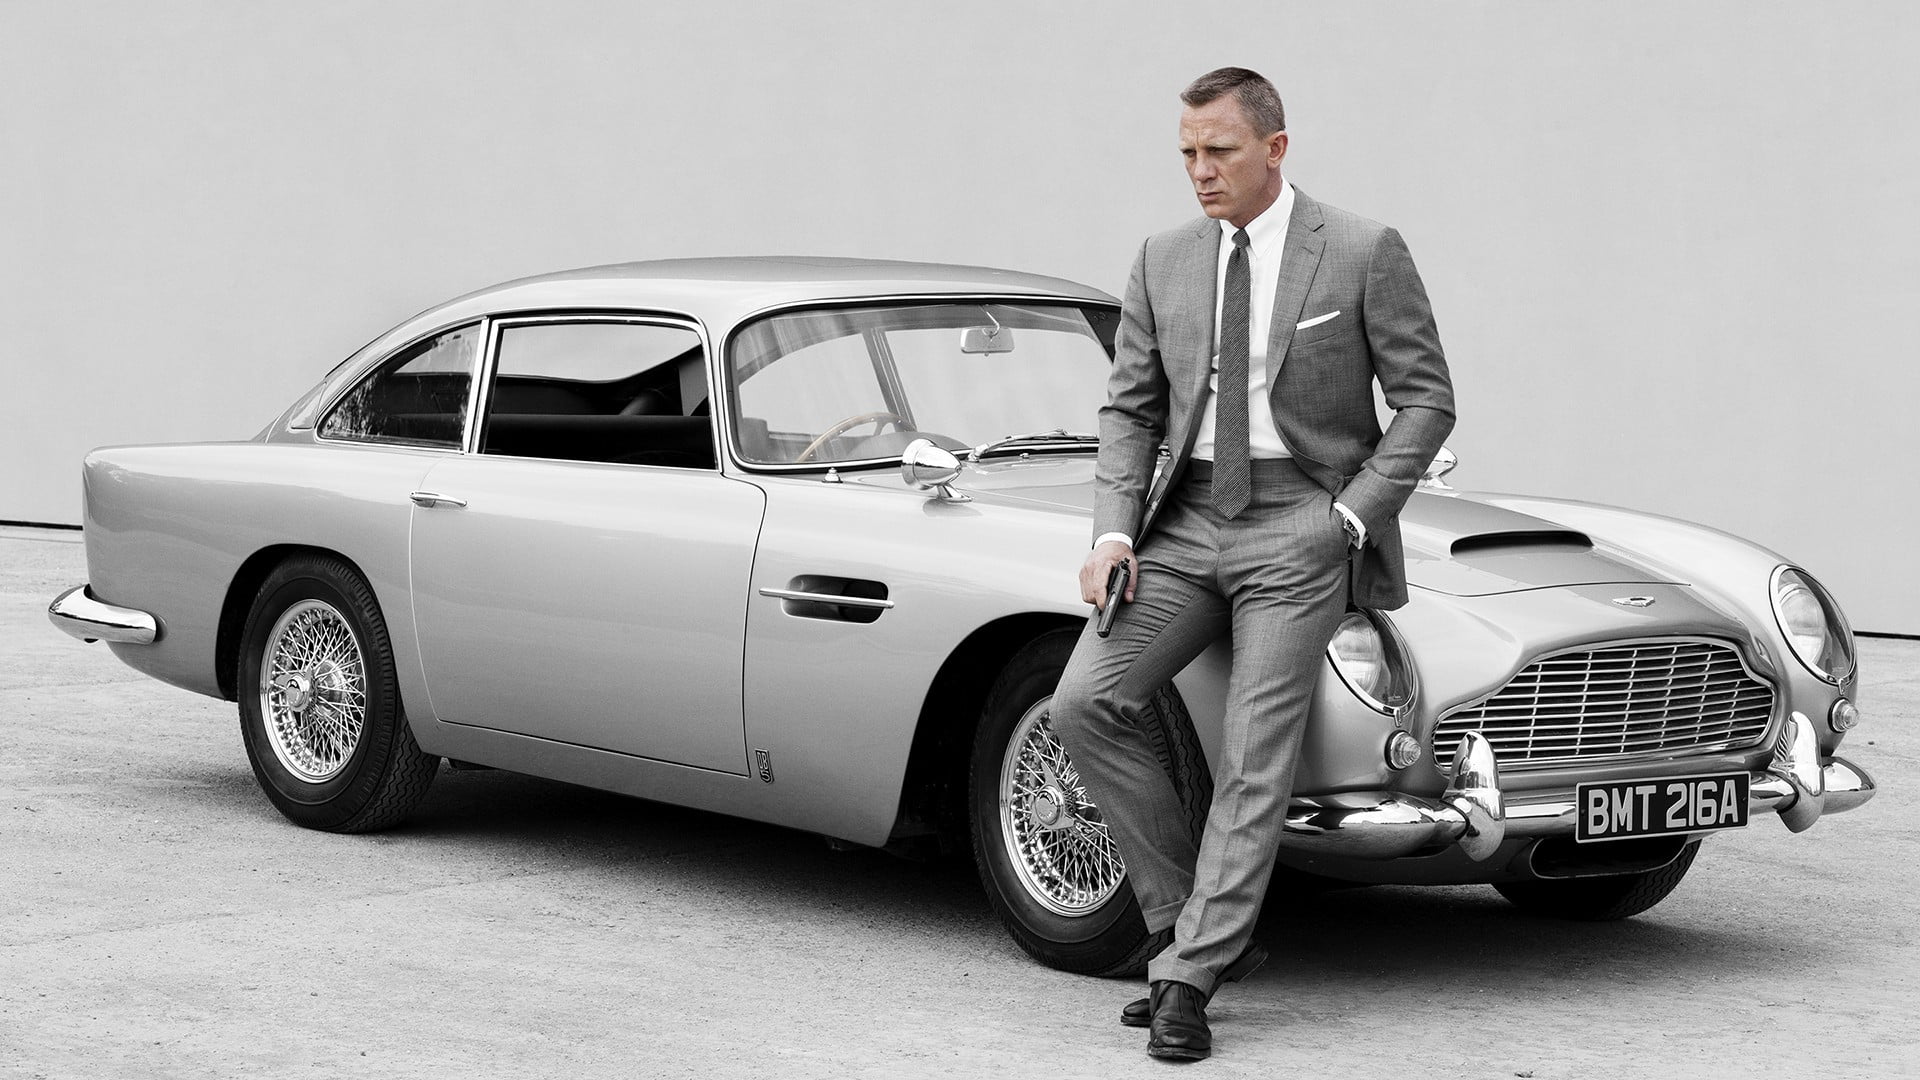 James Bond and his famous Aston Martin DB5